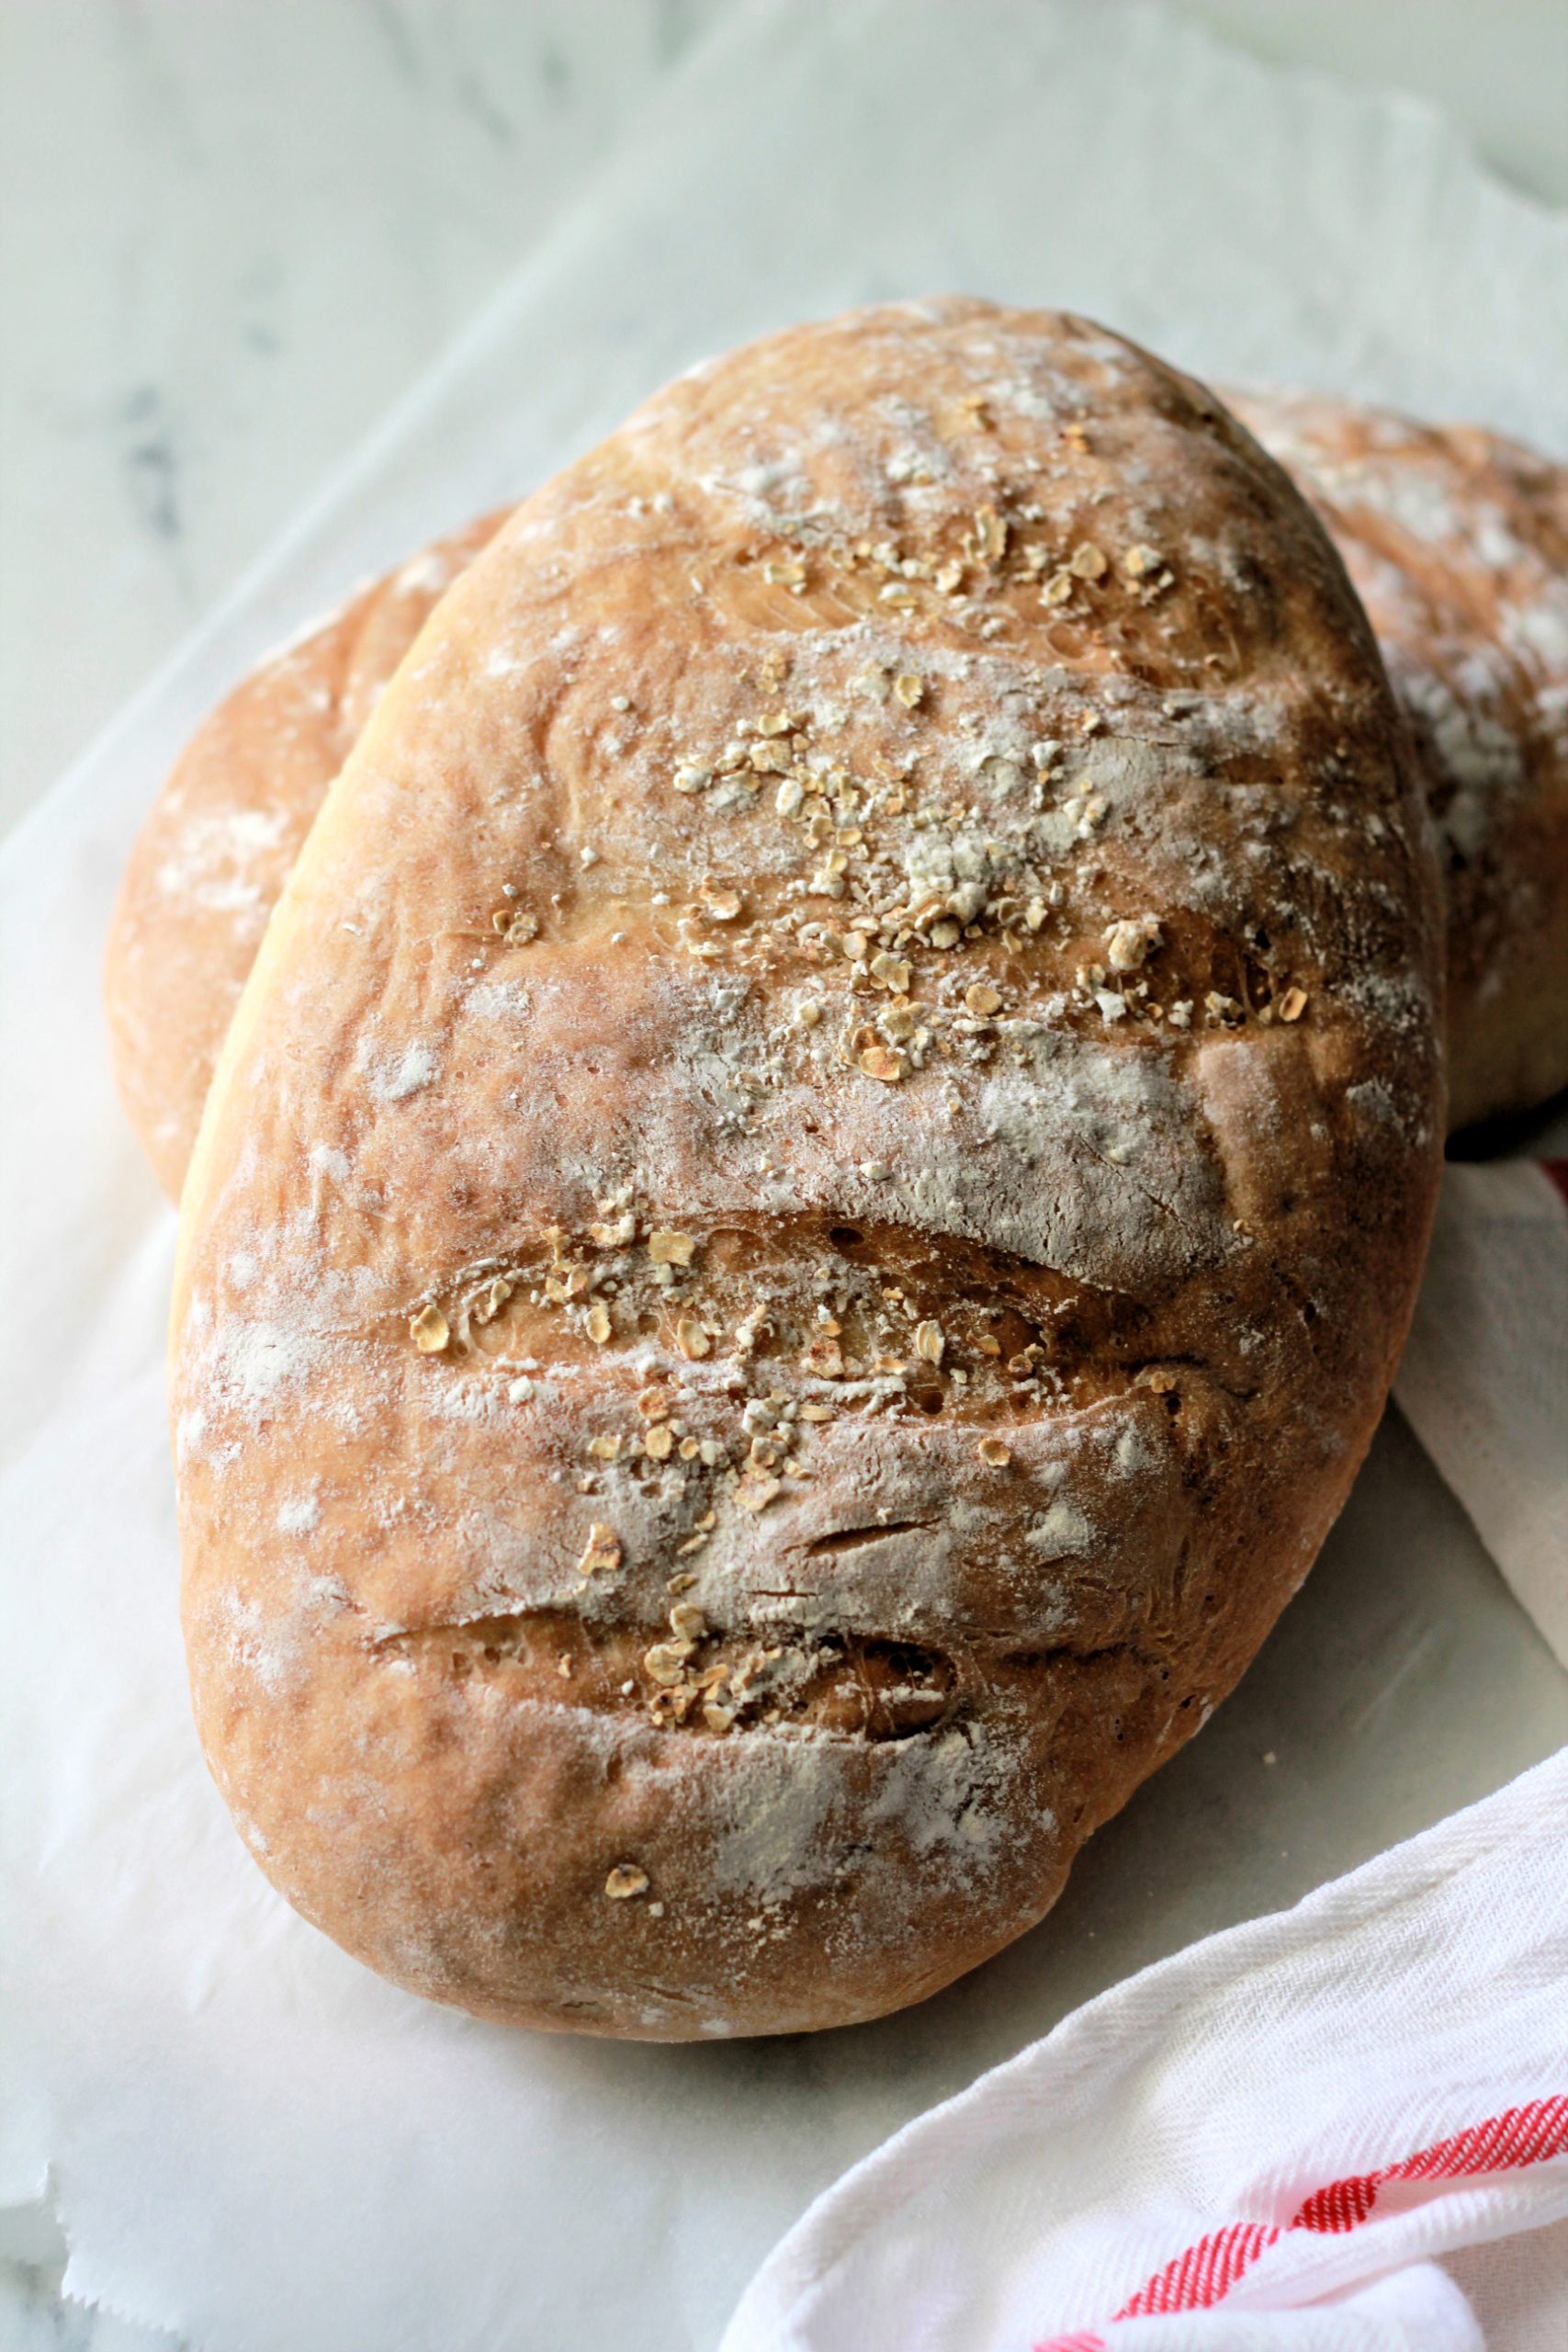 https://www.ruchikrandhap.com/wp-content/uploads/2020/04/Homemade-Bread_1-scaled.jpg